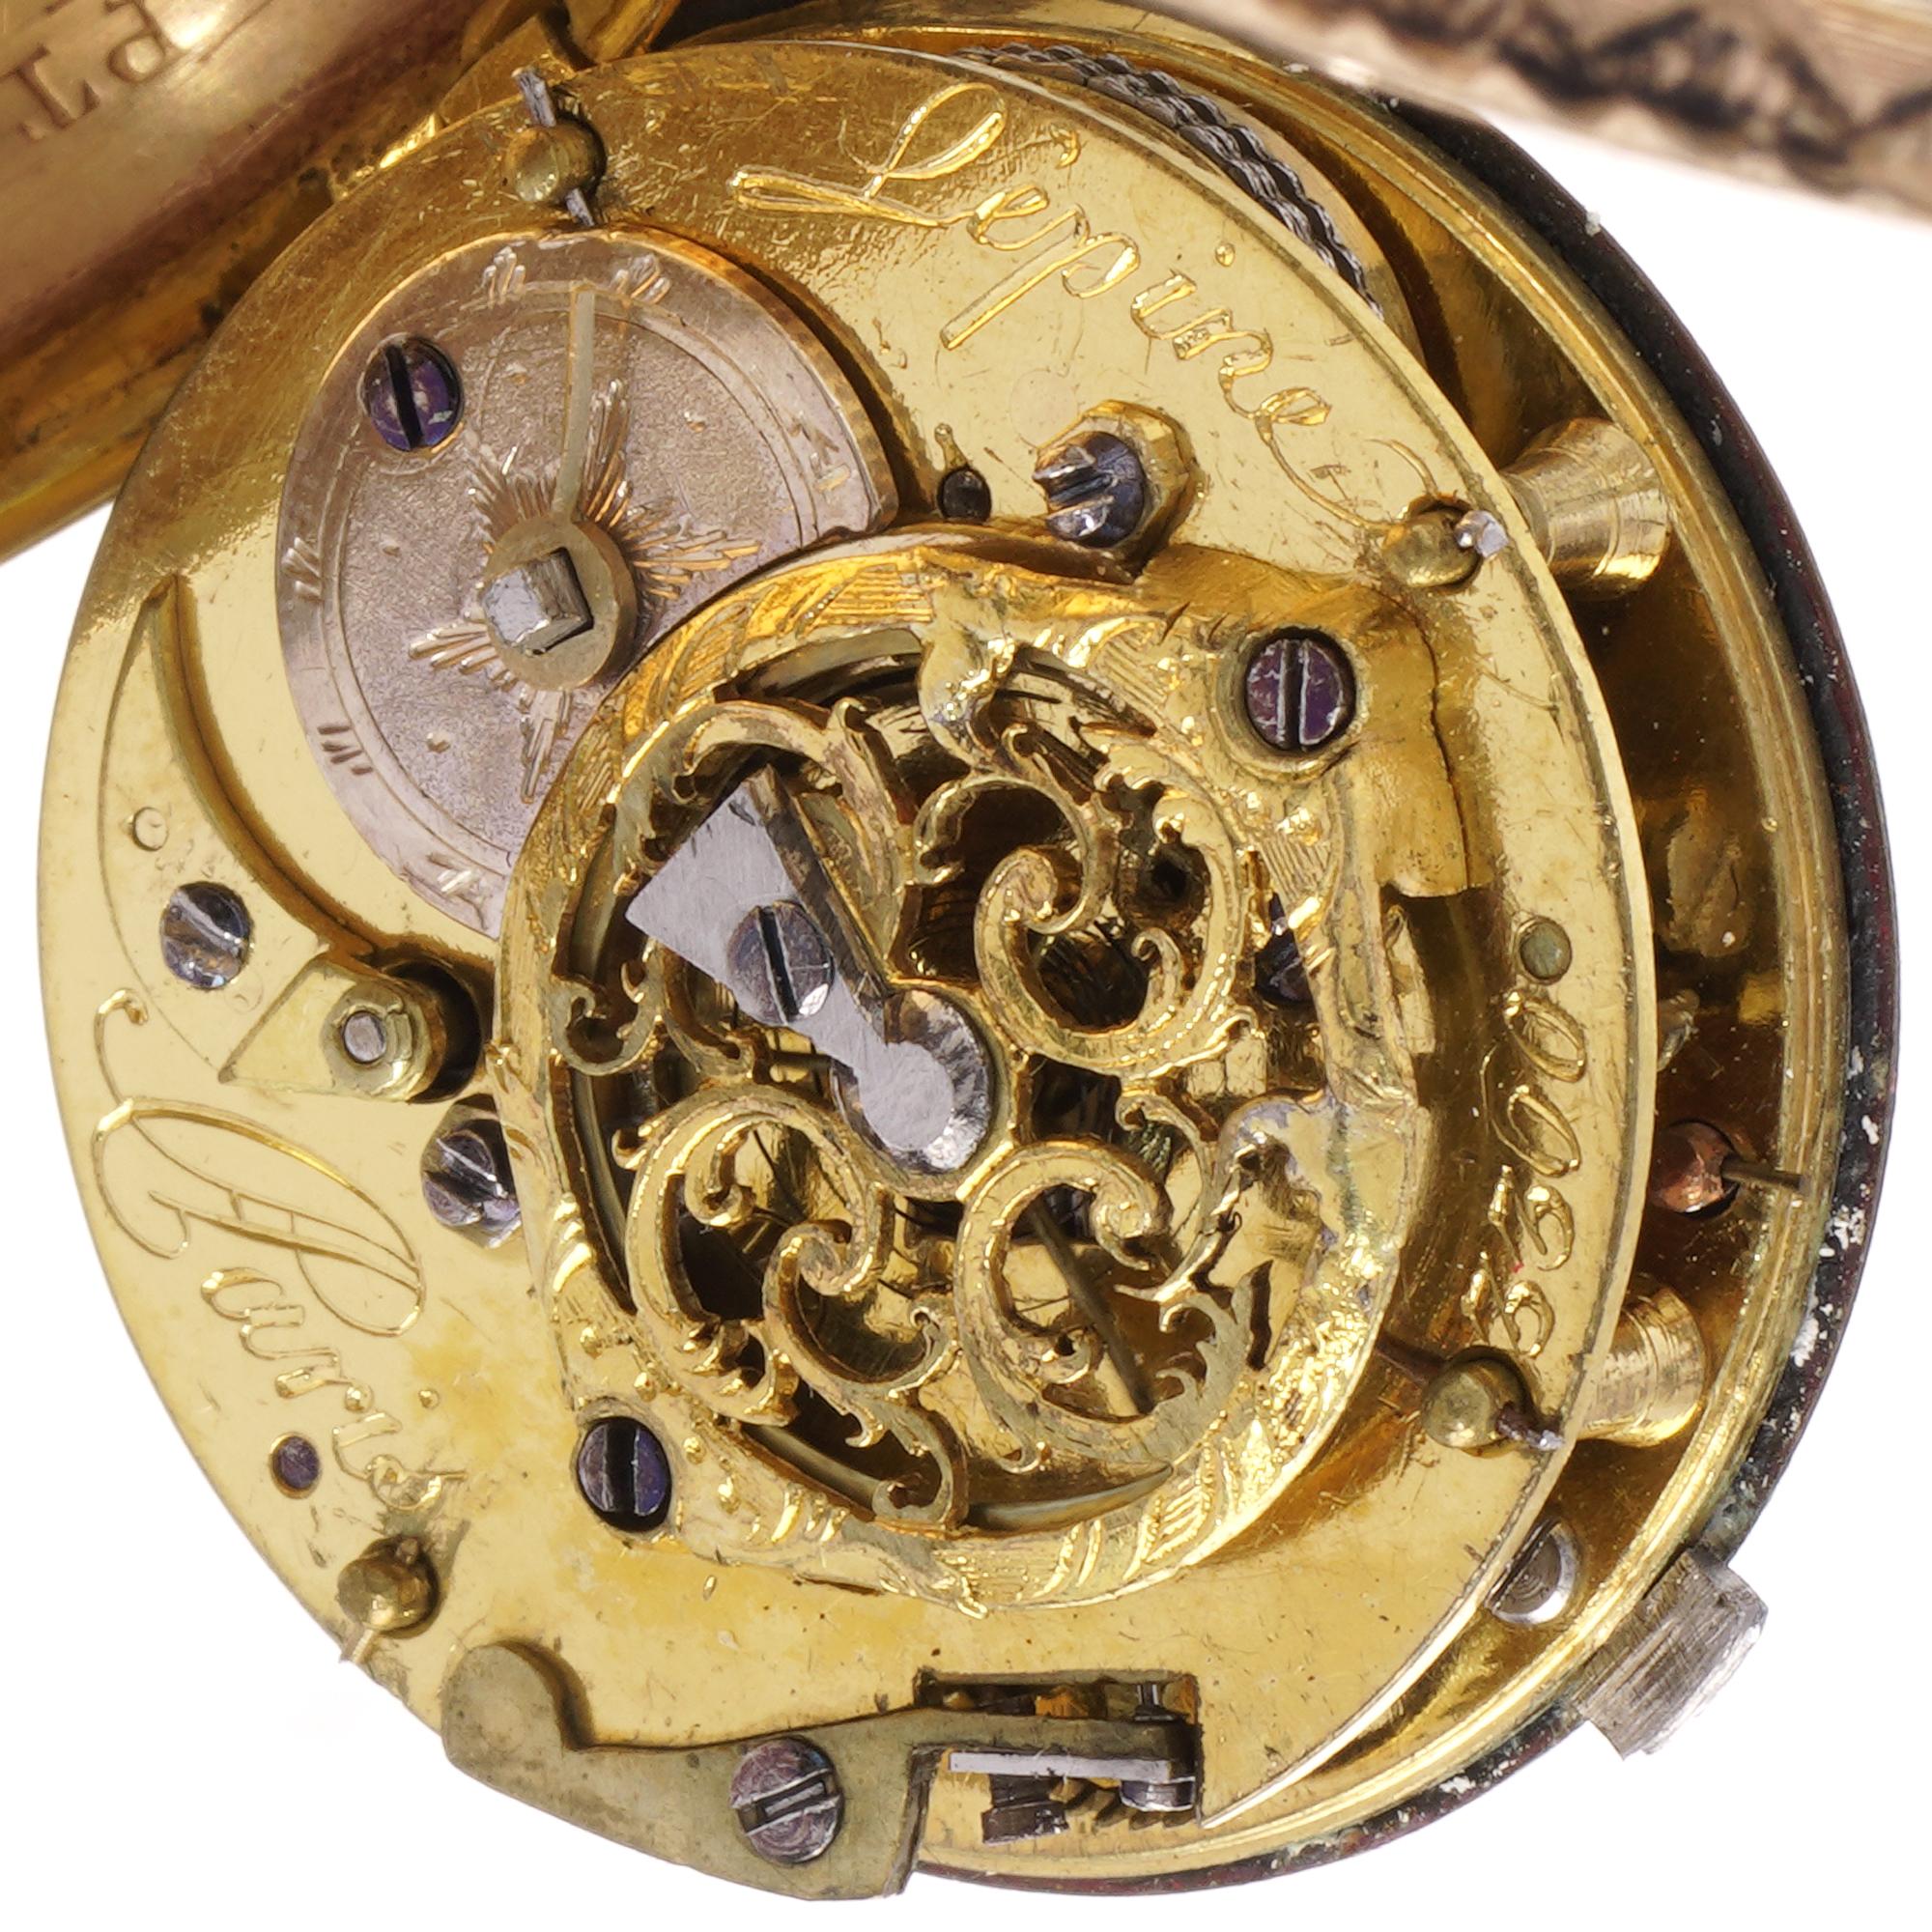 17th century pocket watch